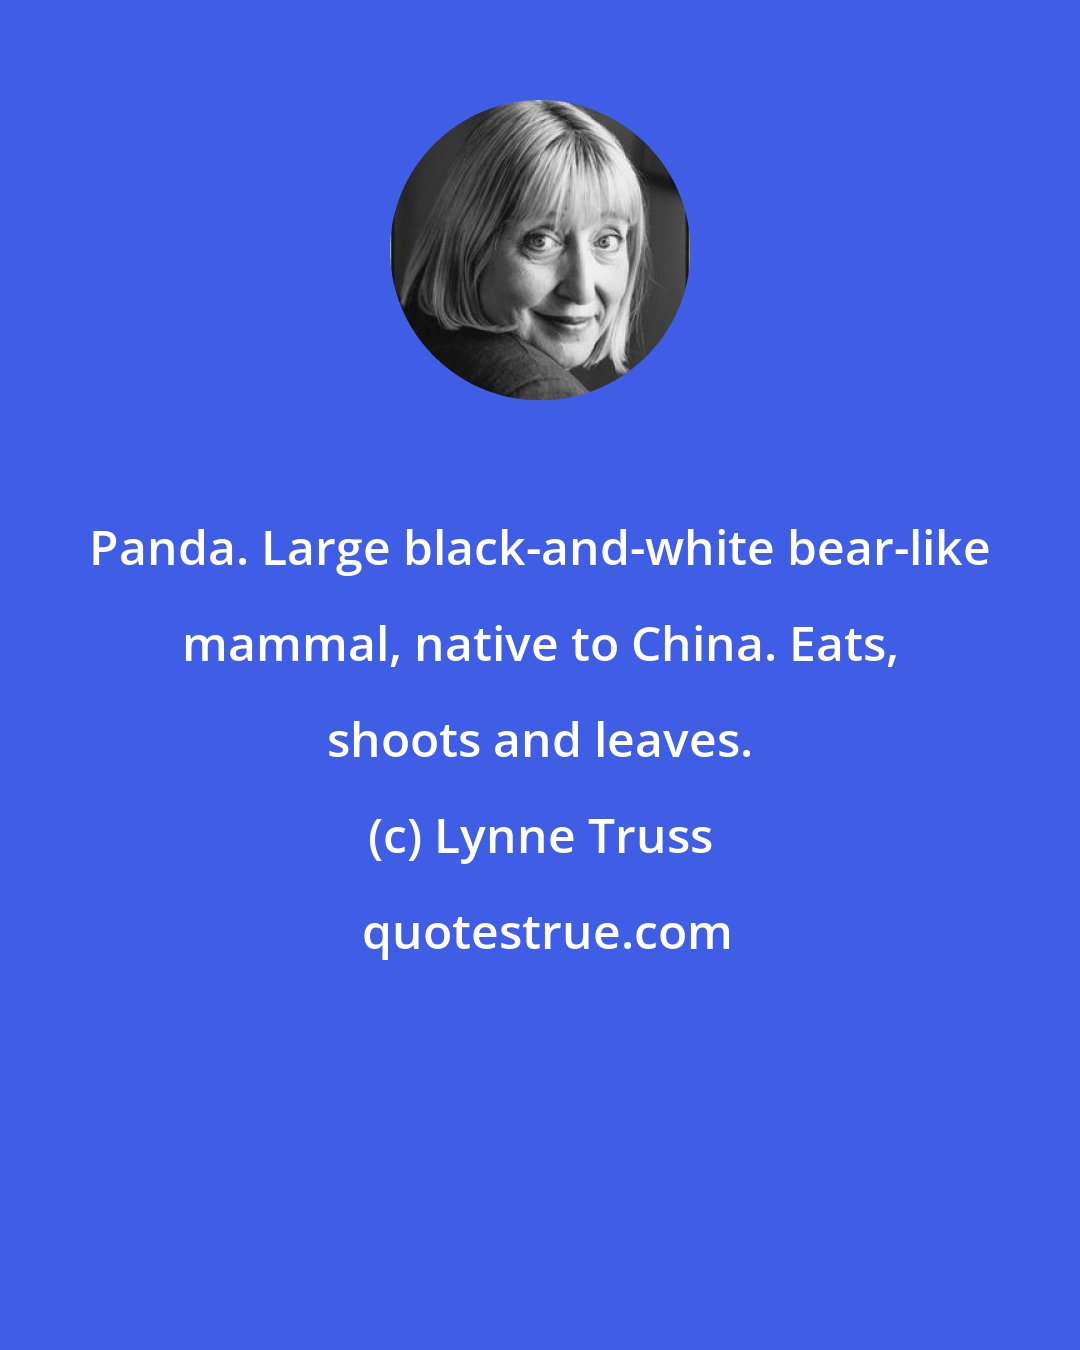 Lynne Truss: Panda. Large black-and-white bear-like mammal, native to China. Eats, shoots and leaves.